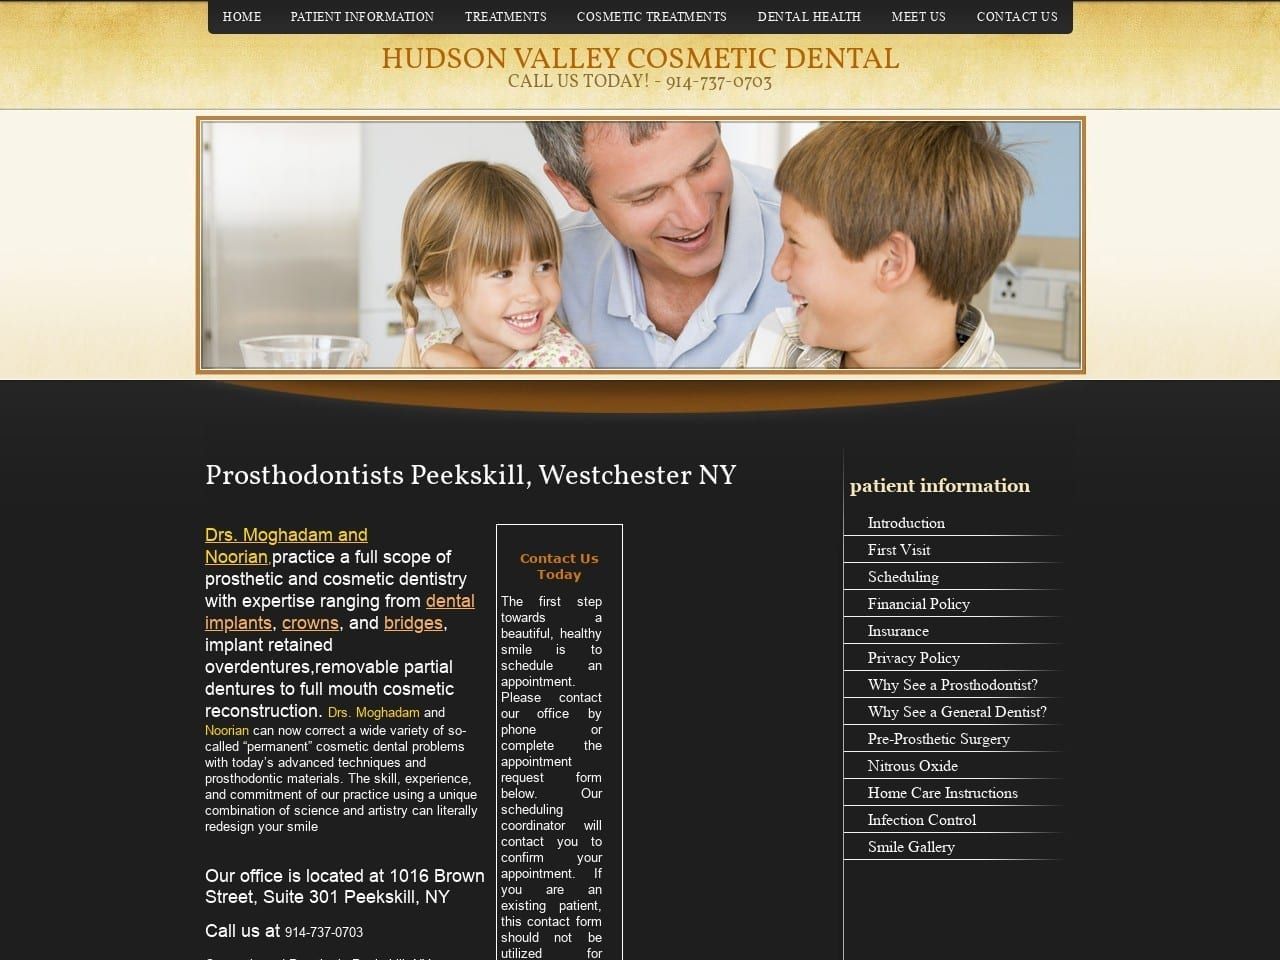 Hudson Valley Cosmetic Dental Website Screenshot from hudsonvalleydental.com